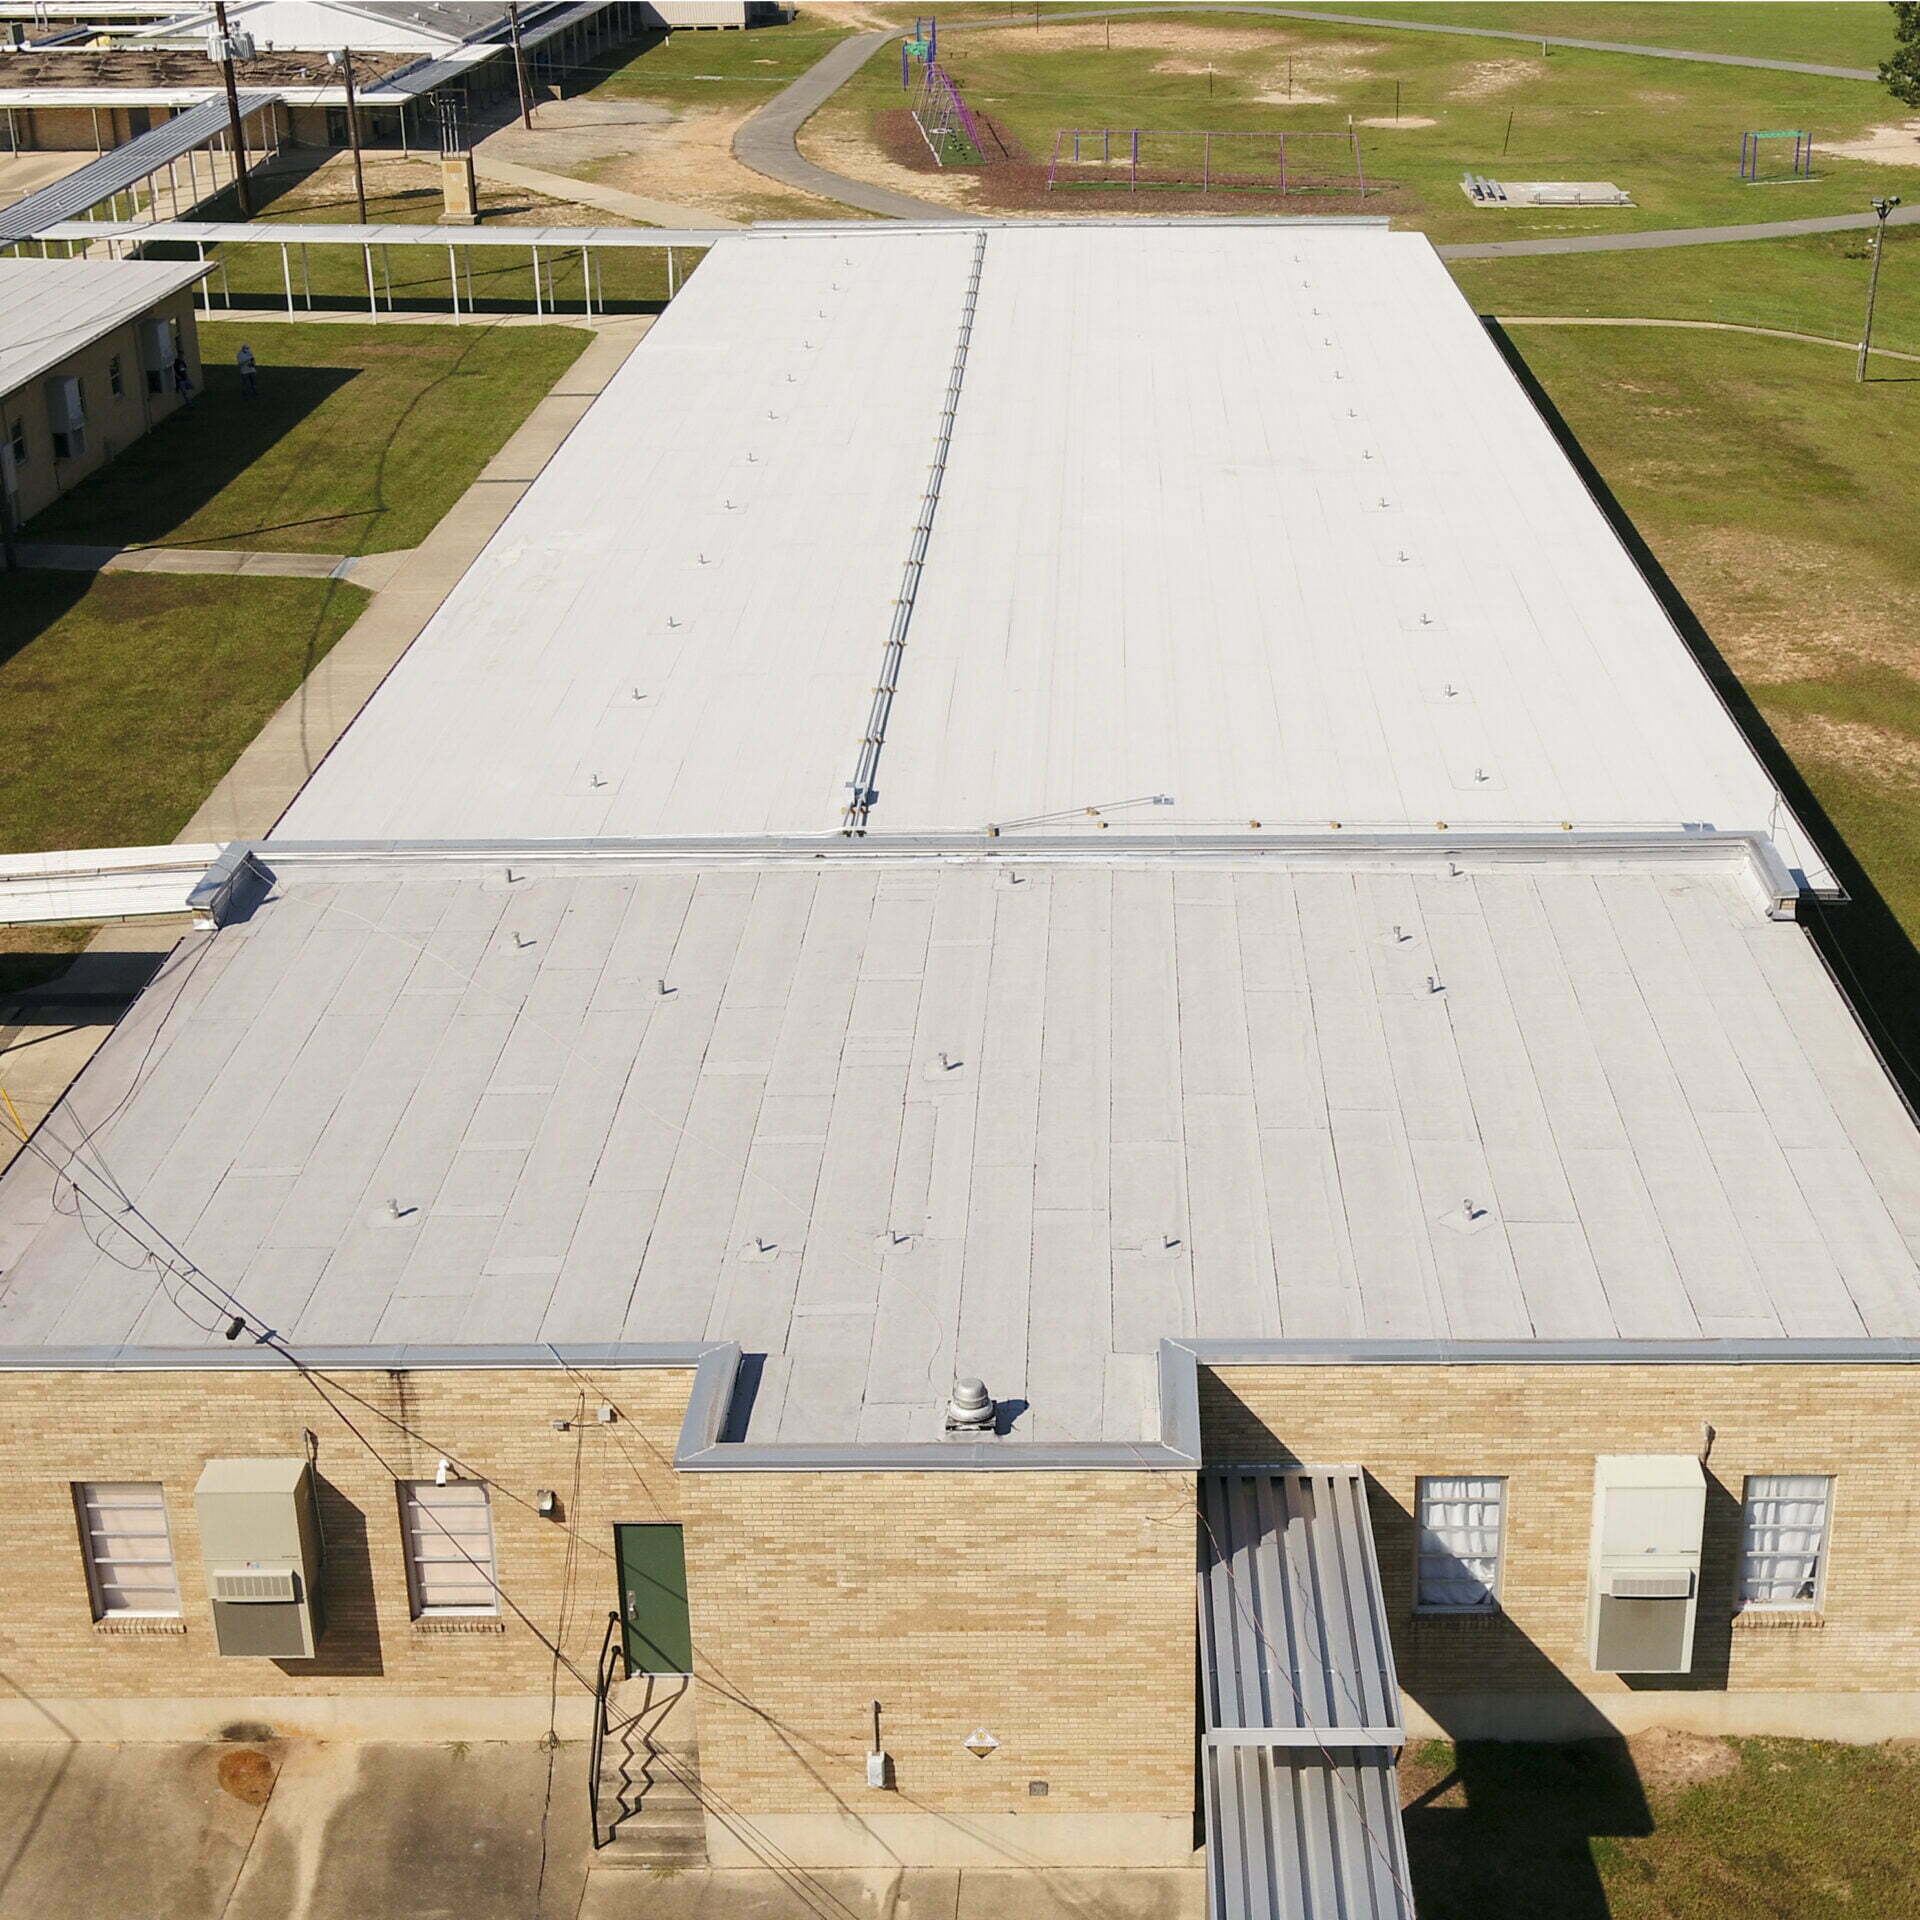 Image shot at Washington Middle School, Completed Drone Shots, El Dorado, Arkansas, October 8, 2021, Jeffrey Parr/Supreme Roofing